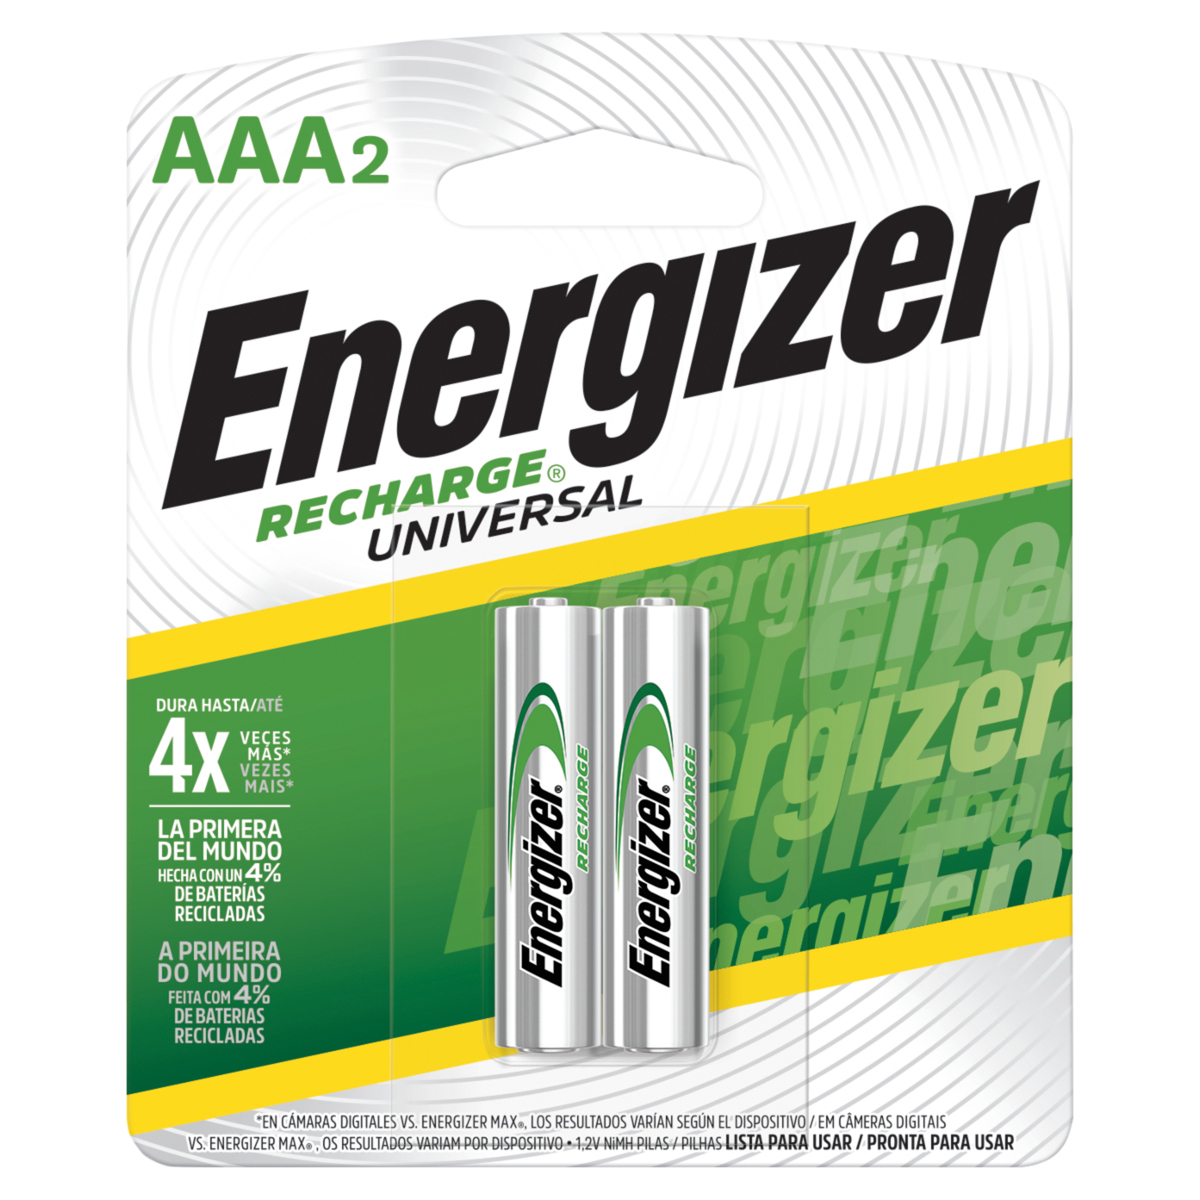 Pilas Recargables AAA Energizer Paquete 2 piezas